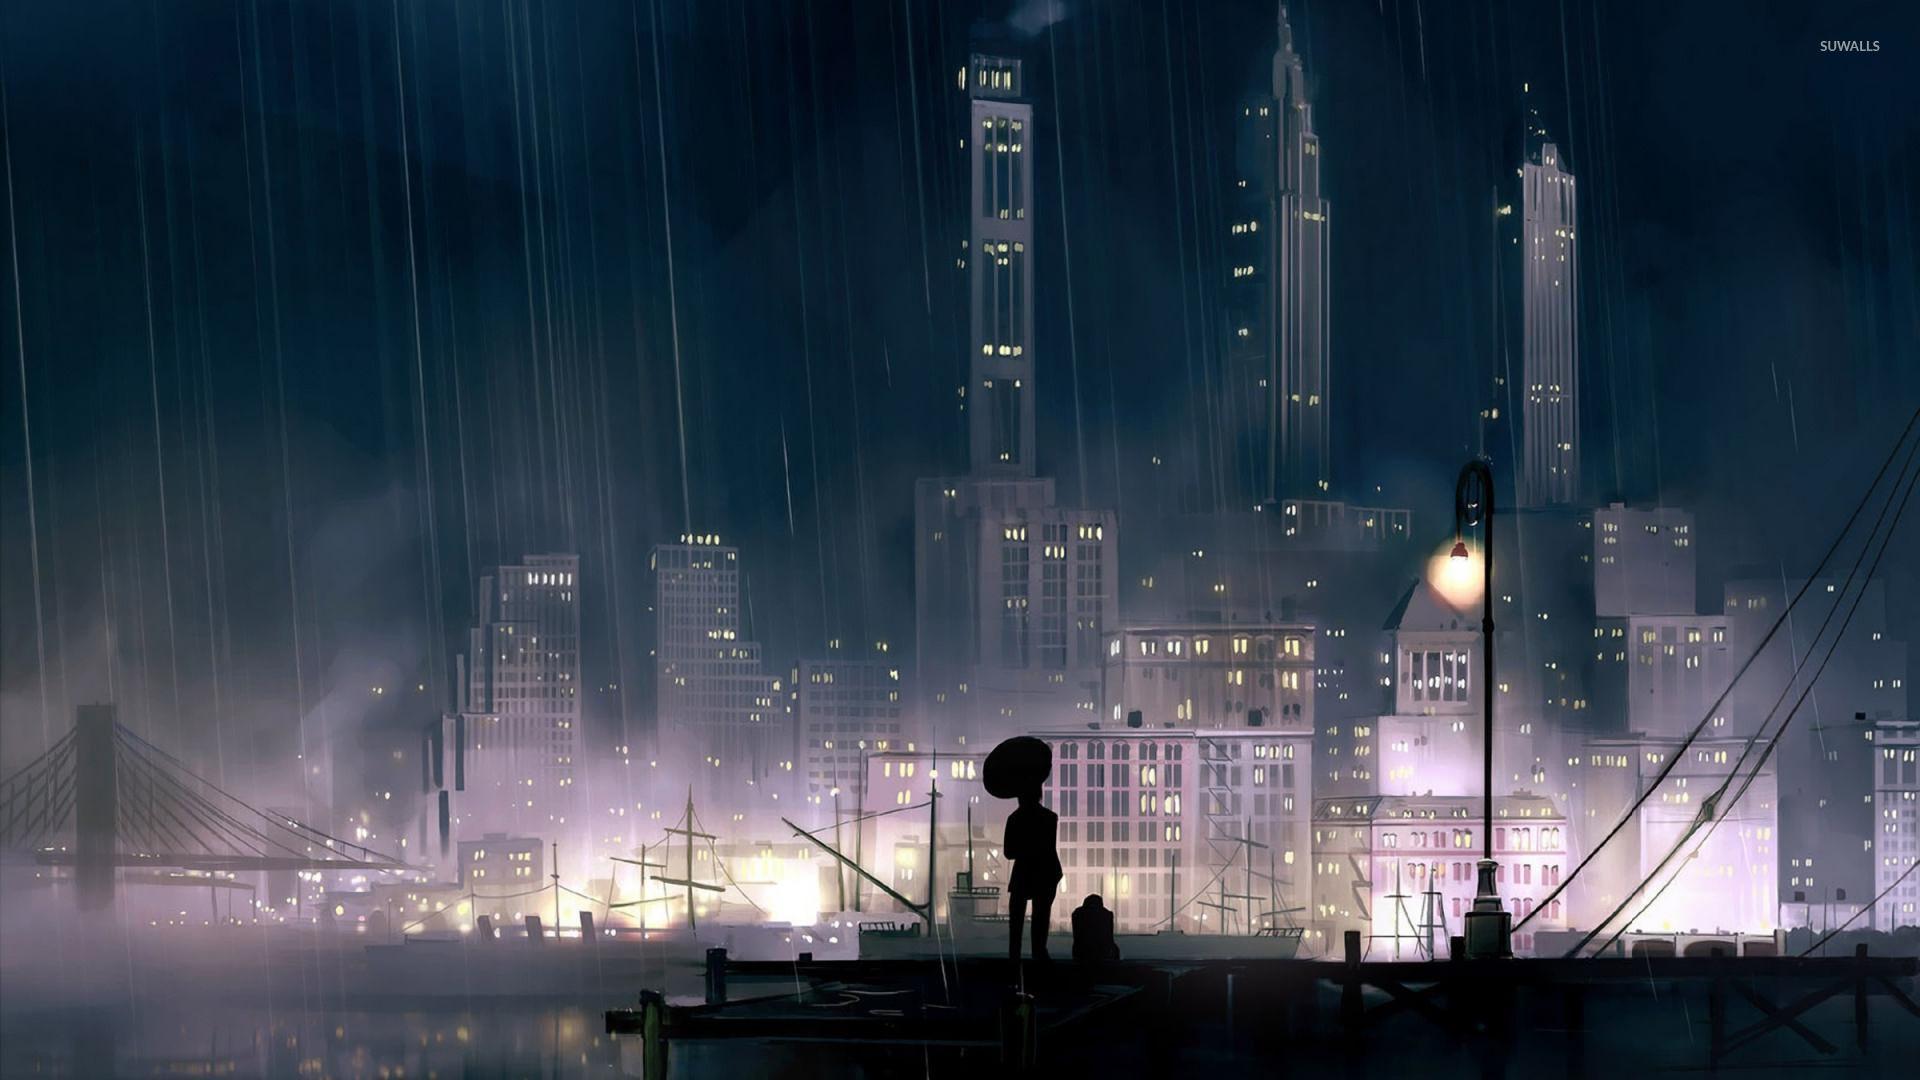 Rainy city at night wallpaper wallpaper